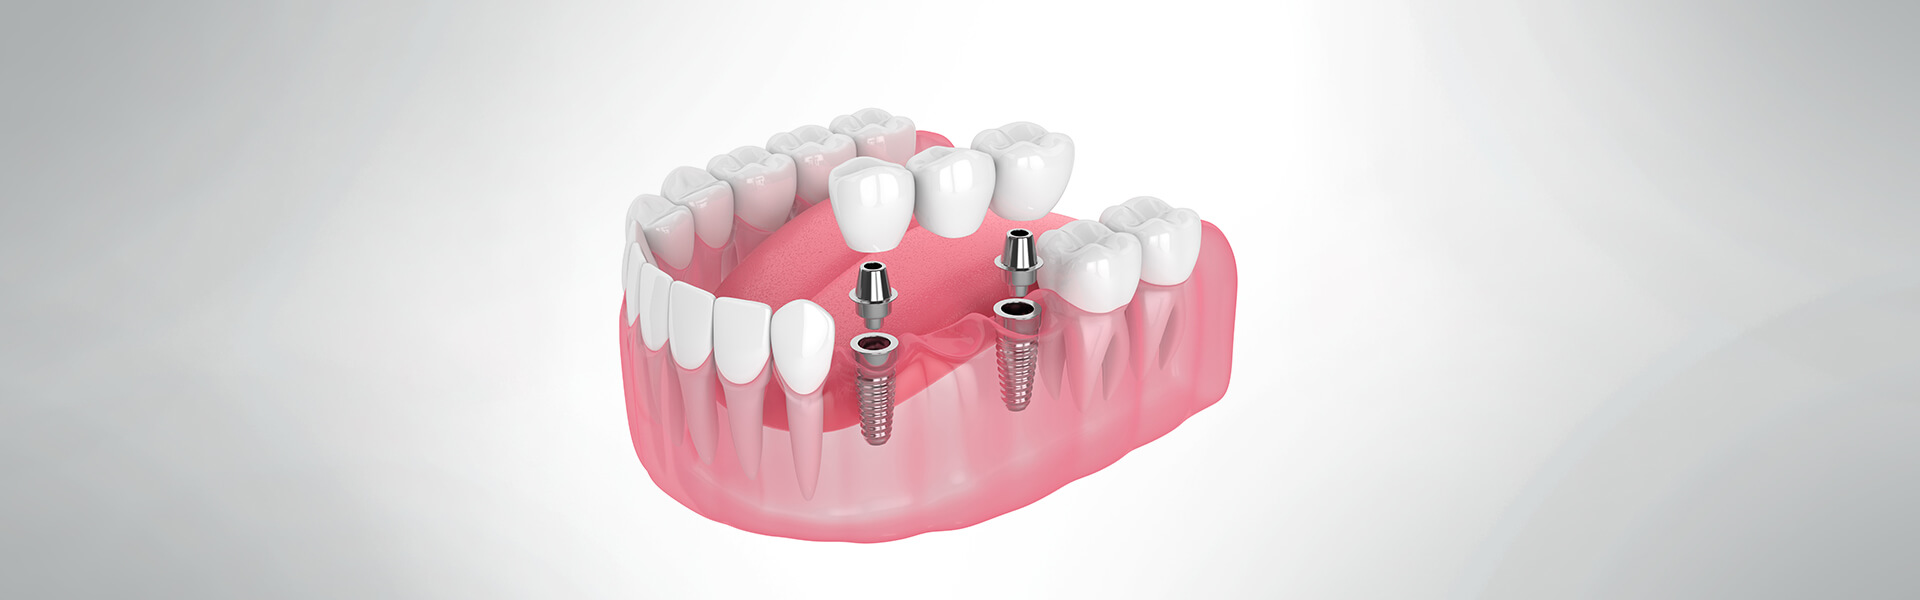 Dental Implants: Advantages, Risks, and Insurance (FAQs)